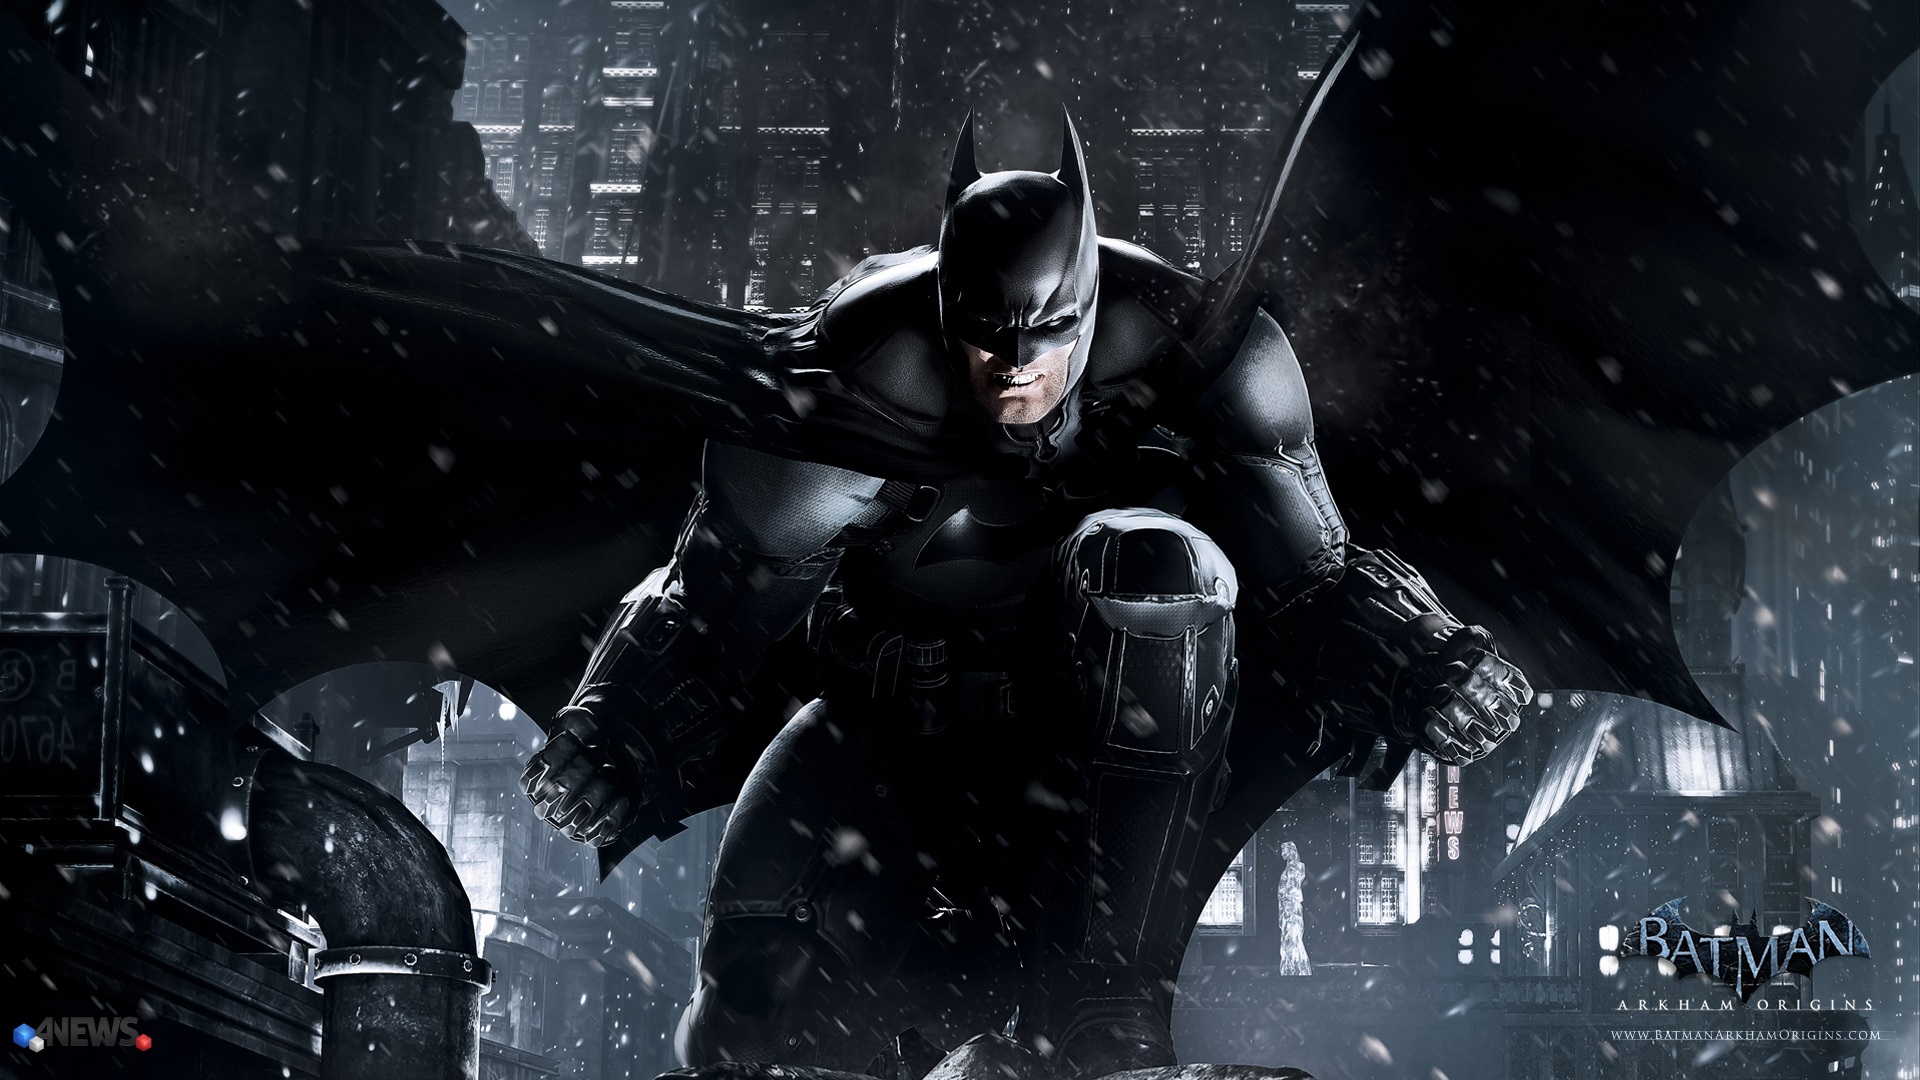 New-Batman-Arkham-Origins-Images-emerge-online-2